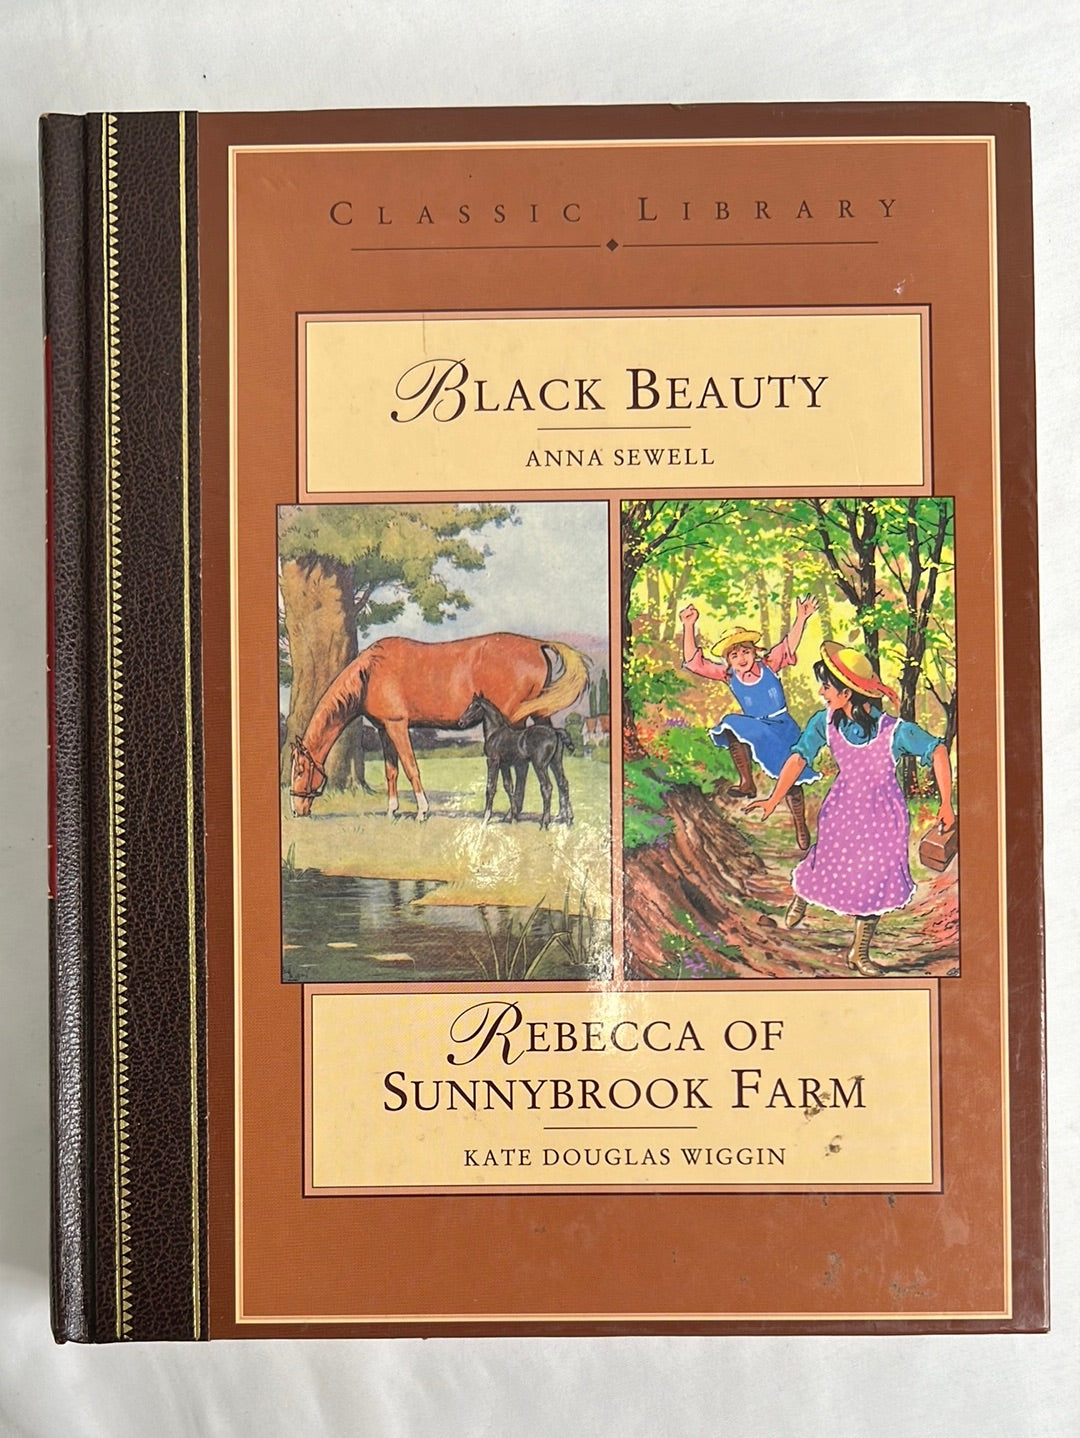 Classic Library Black Beauty/Rebecca of Sunnybrook Farm - Anna Sewell/Kate Douglas Wiggin